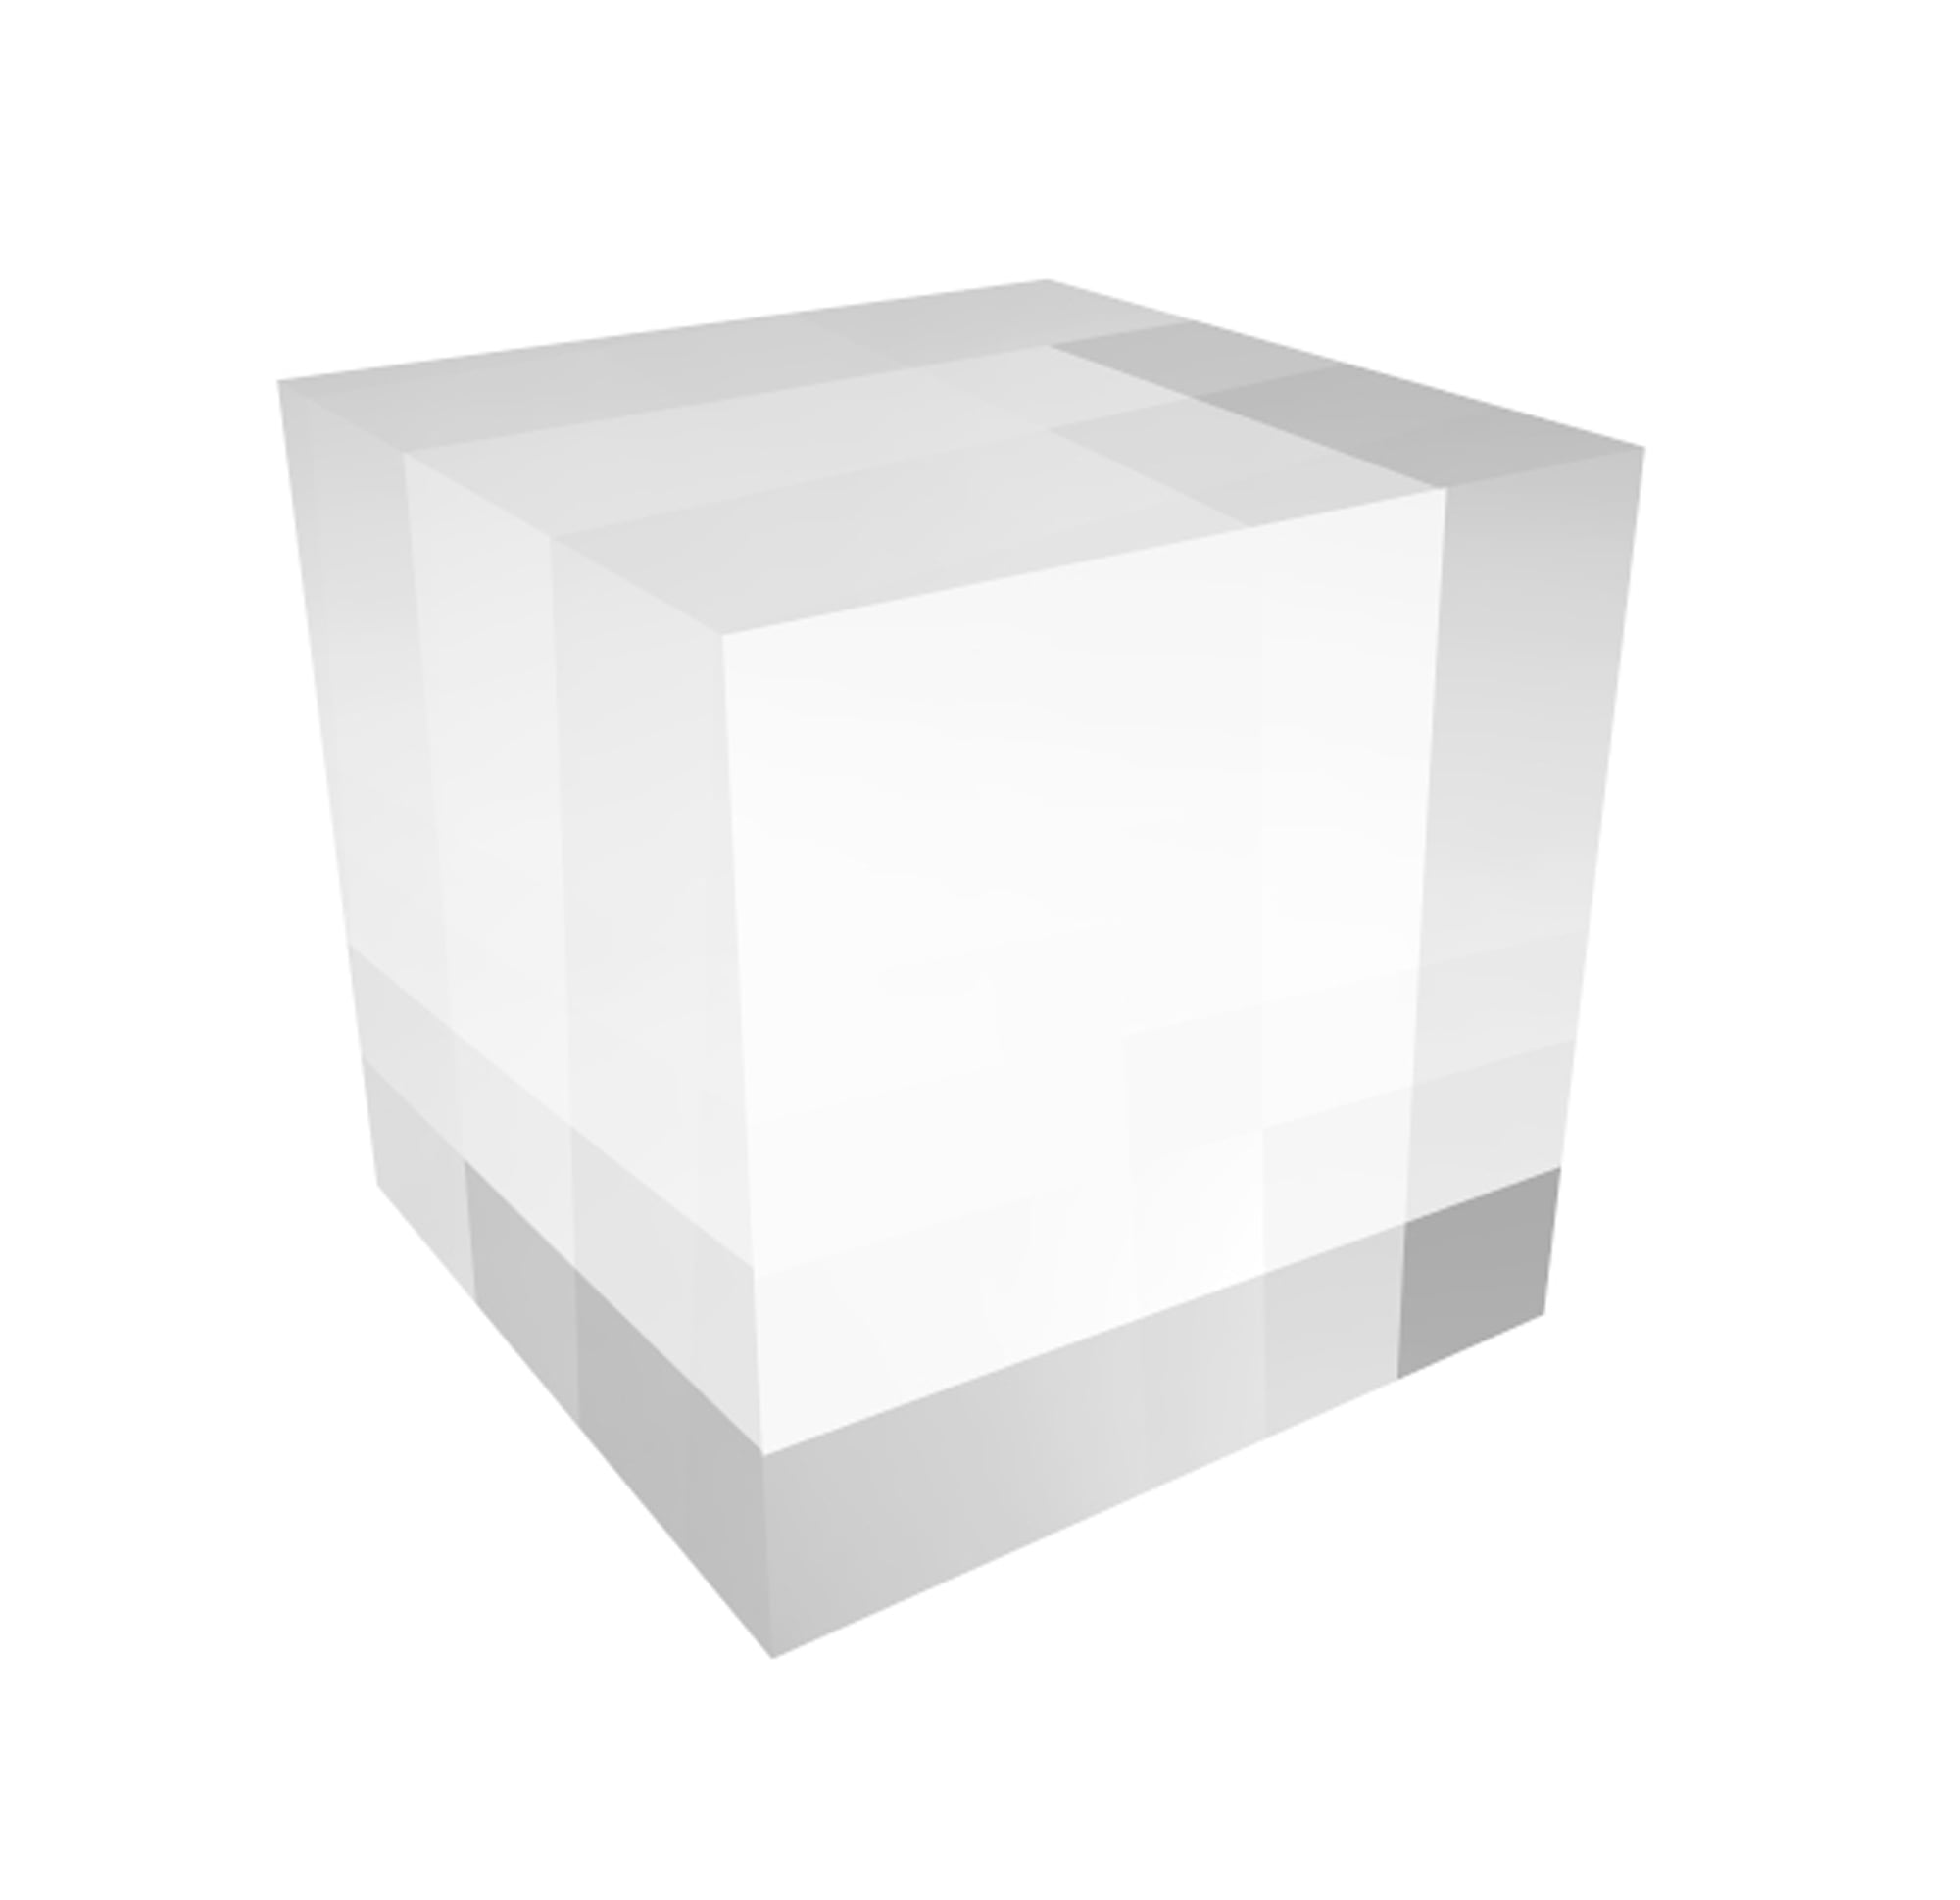 FixtureDisplays 4PK 1x1x1 Acrylic Riser Paper Weight Clear Acrylic Cube Riser Solid Block 18830-1x1x1-4PK 